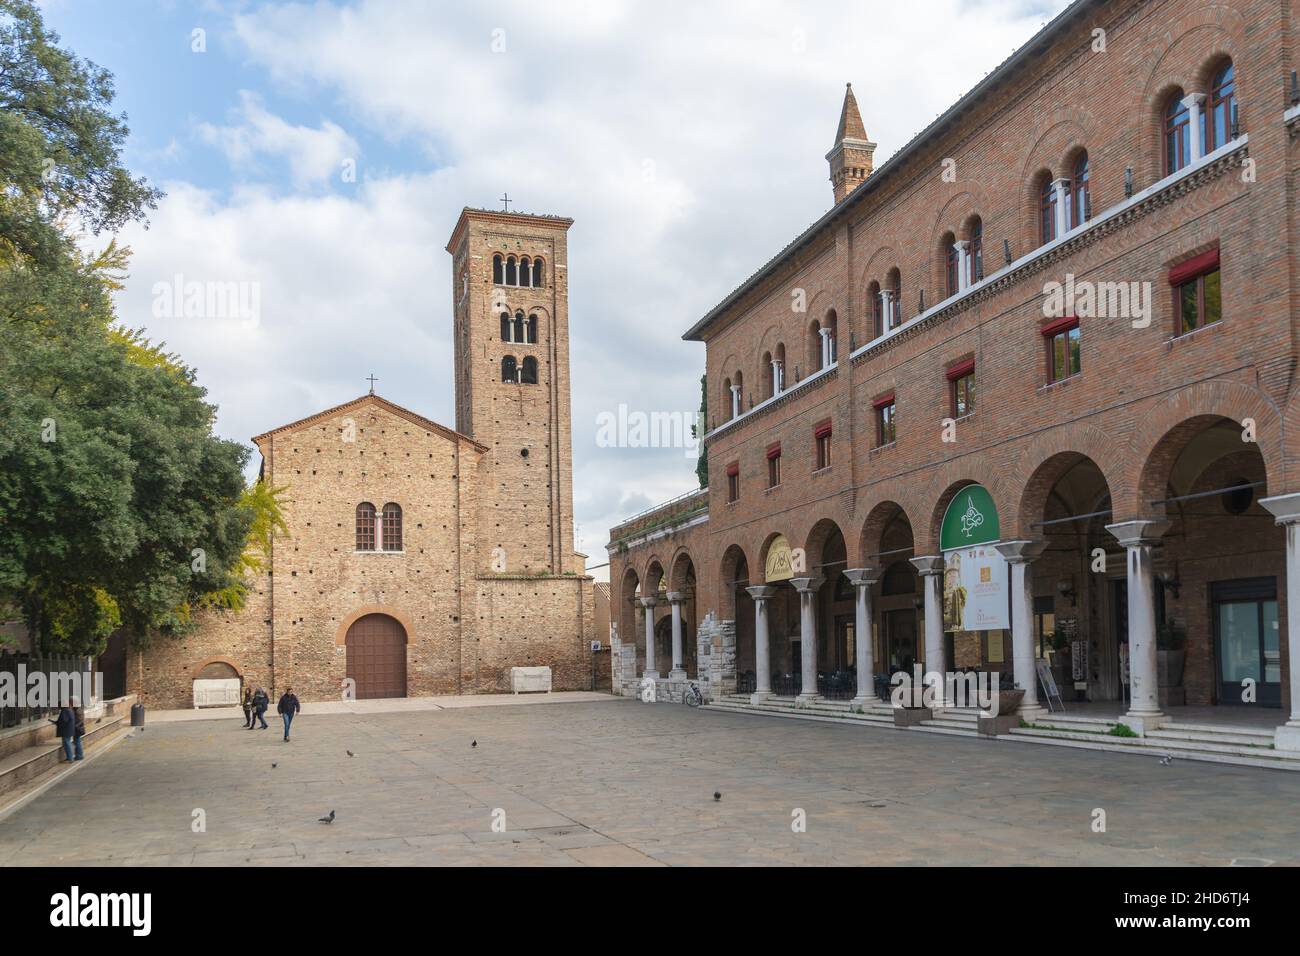 Piazza San Francesco square, Old Town; View of the Basilica of San Francesco church, Ravenna, Emilia romagna; Italy, Europe Stock Photo